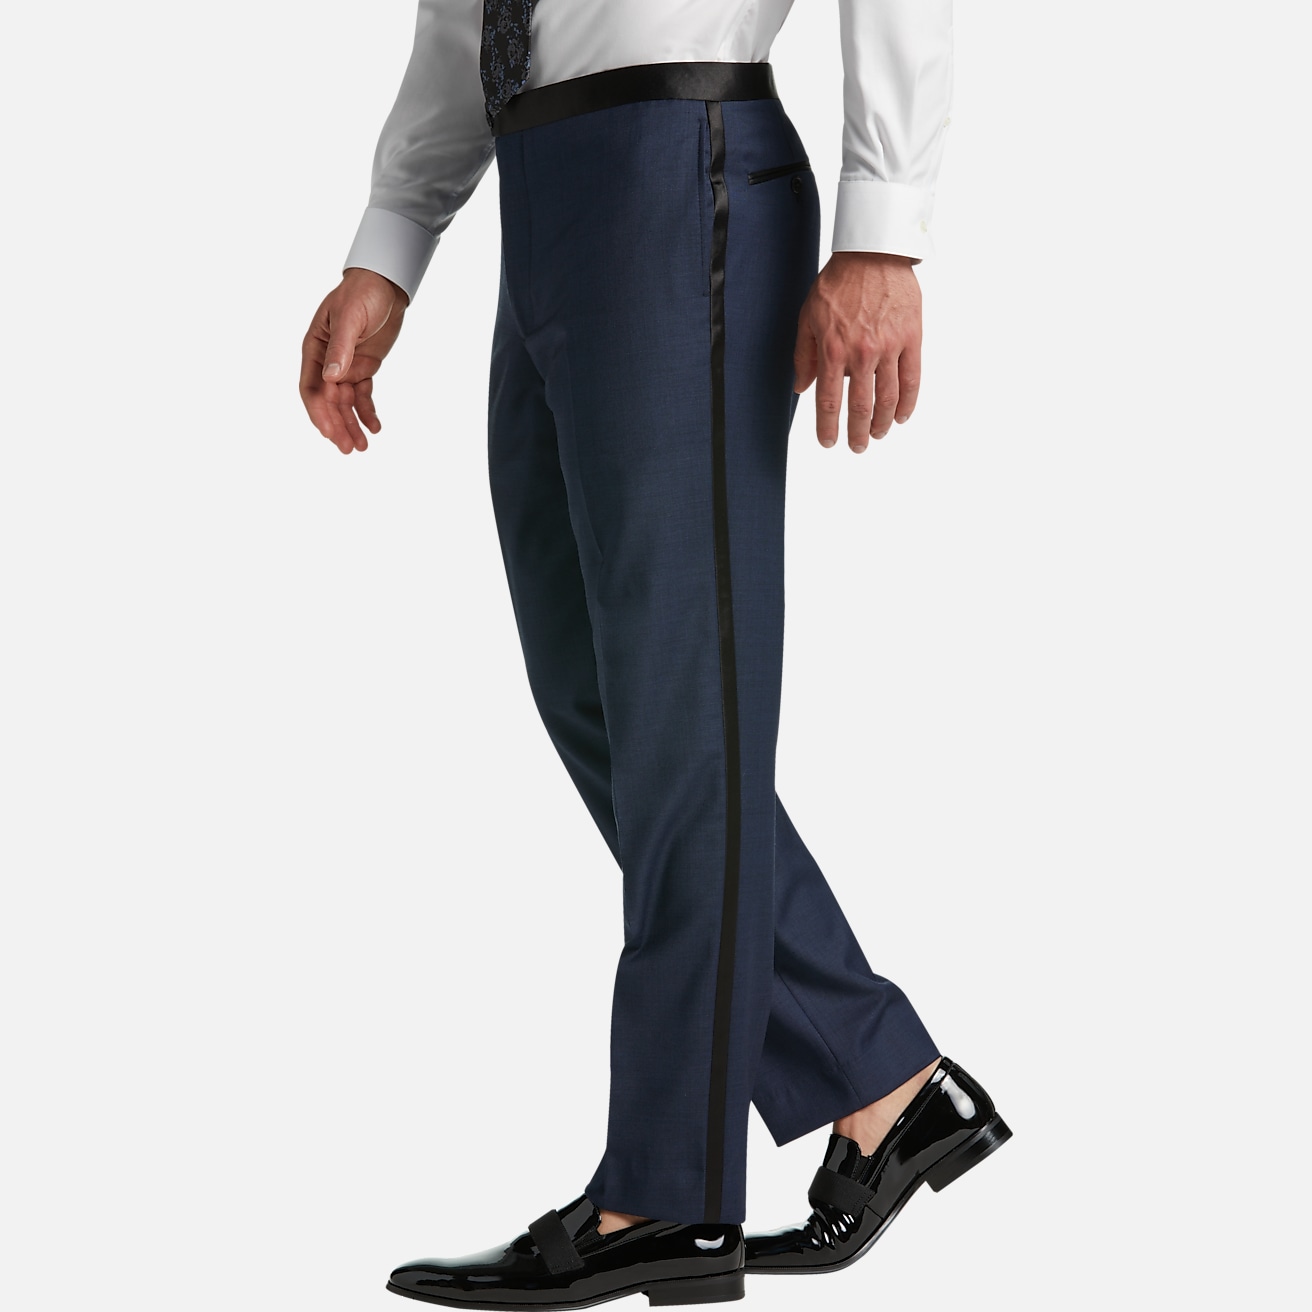 Pronto Uomo Platinum Modern Fit Suit Separates Tuxedo Pants